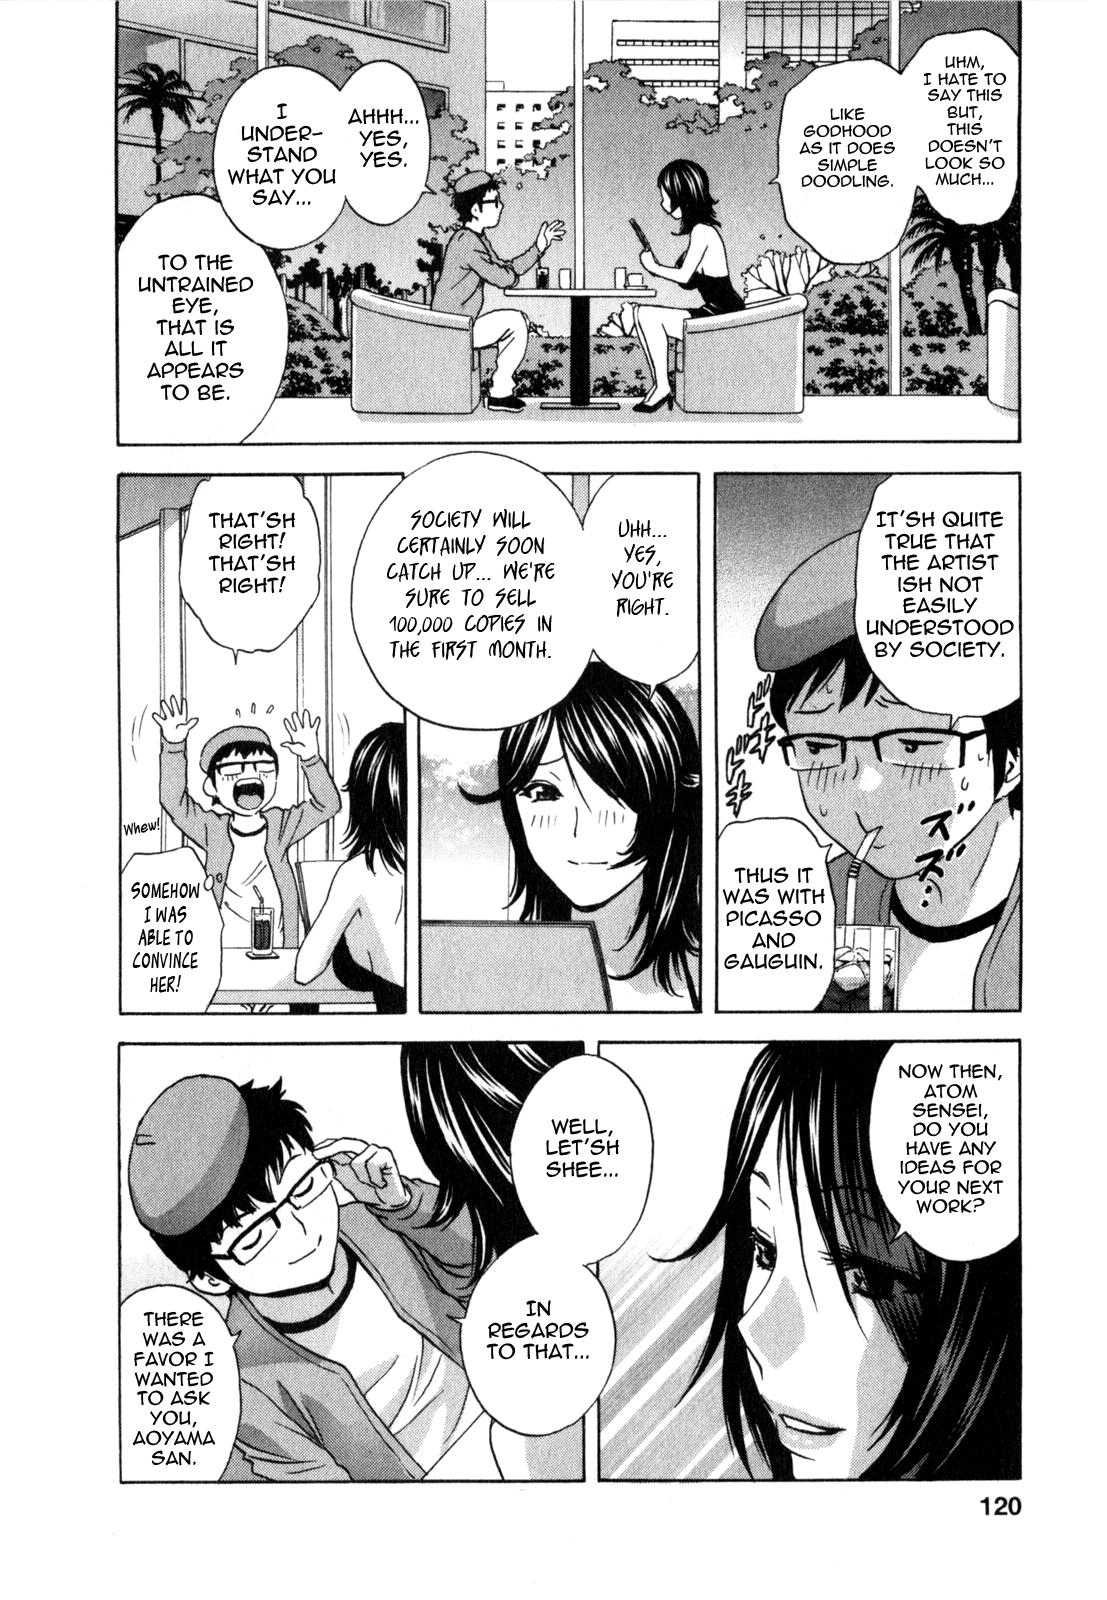 [Hidemaru] Life with Married Women Just Like a Manga 3 - Ch. 1-8 [English] {Tadanohito} 127